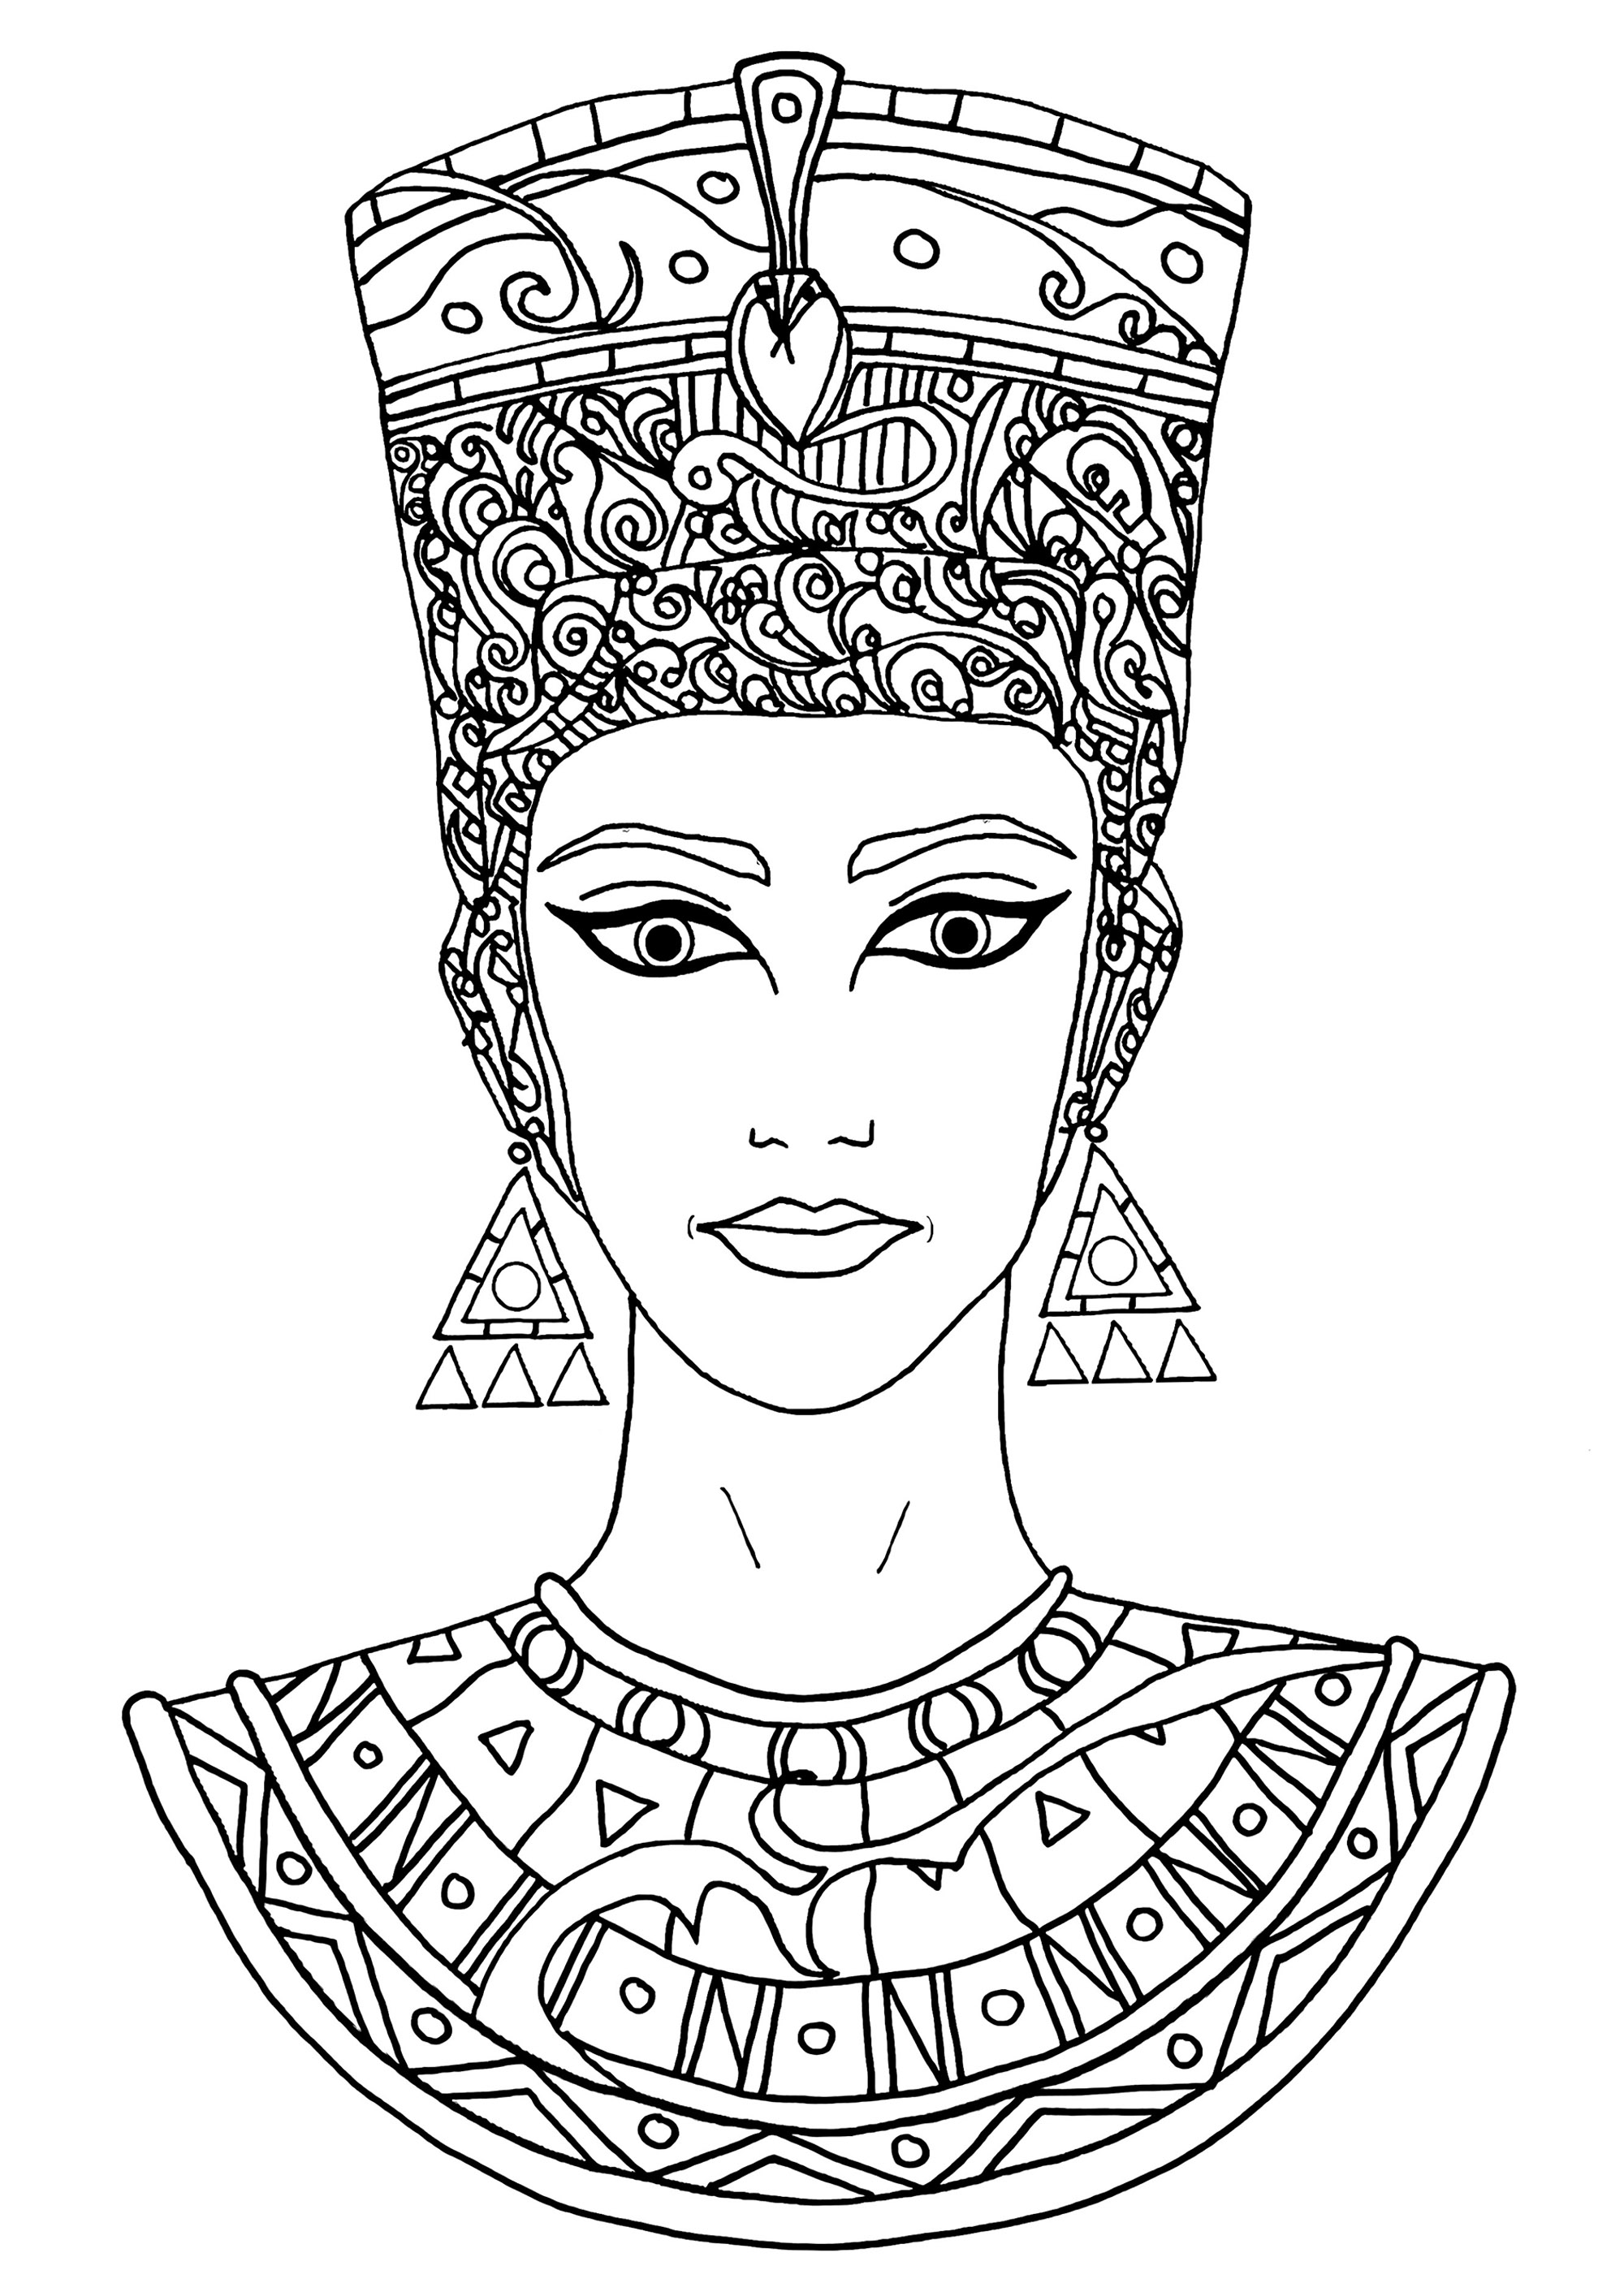 1304 Nefertiti Drawing Images Stock Photos  Vectors  Shutterstock